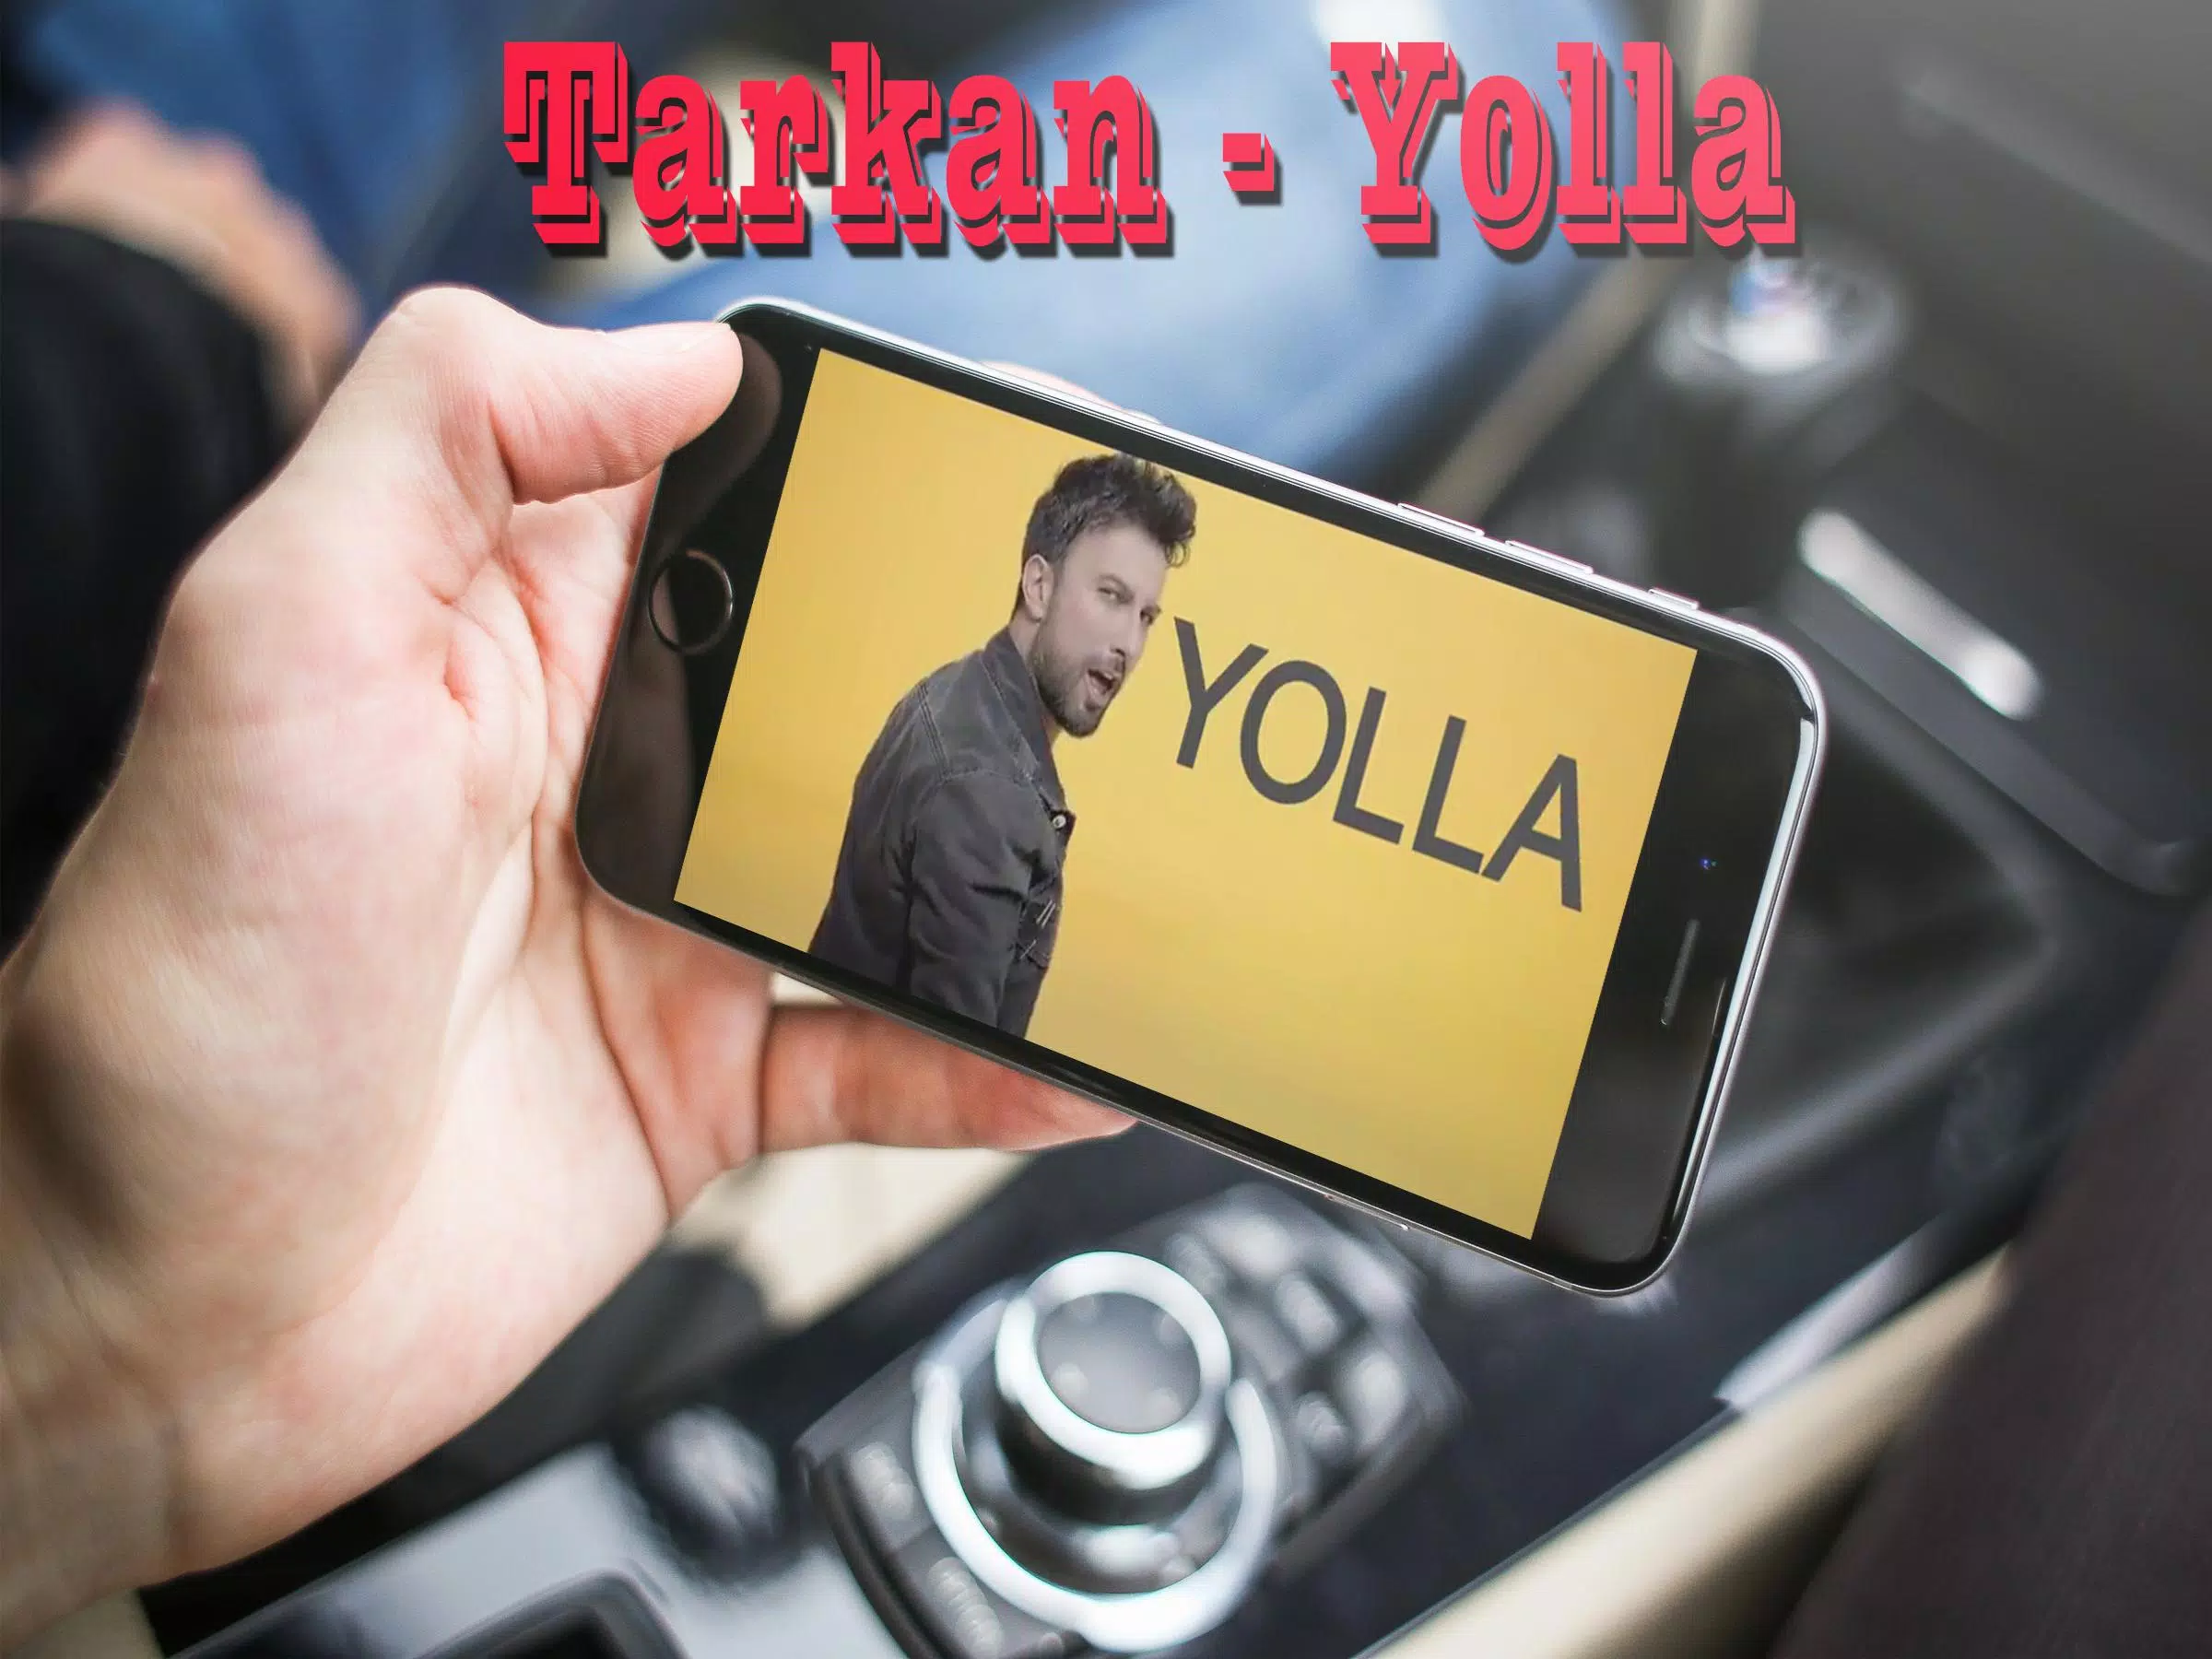 Tarkan - Yolla APK for Android Download